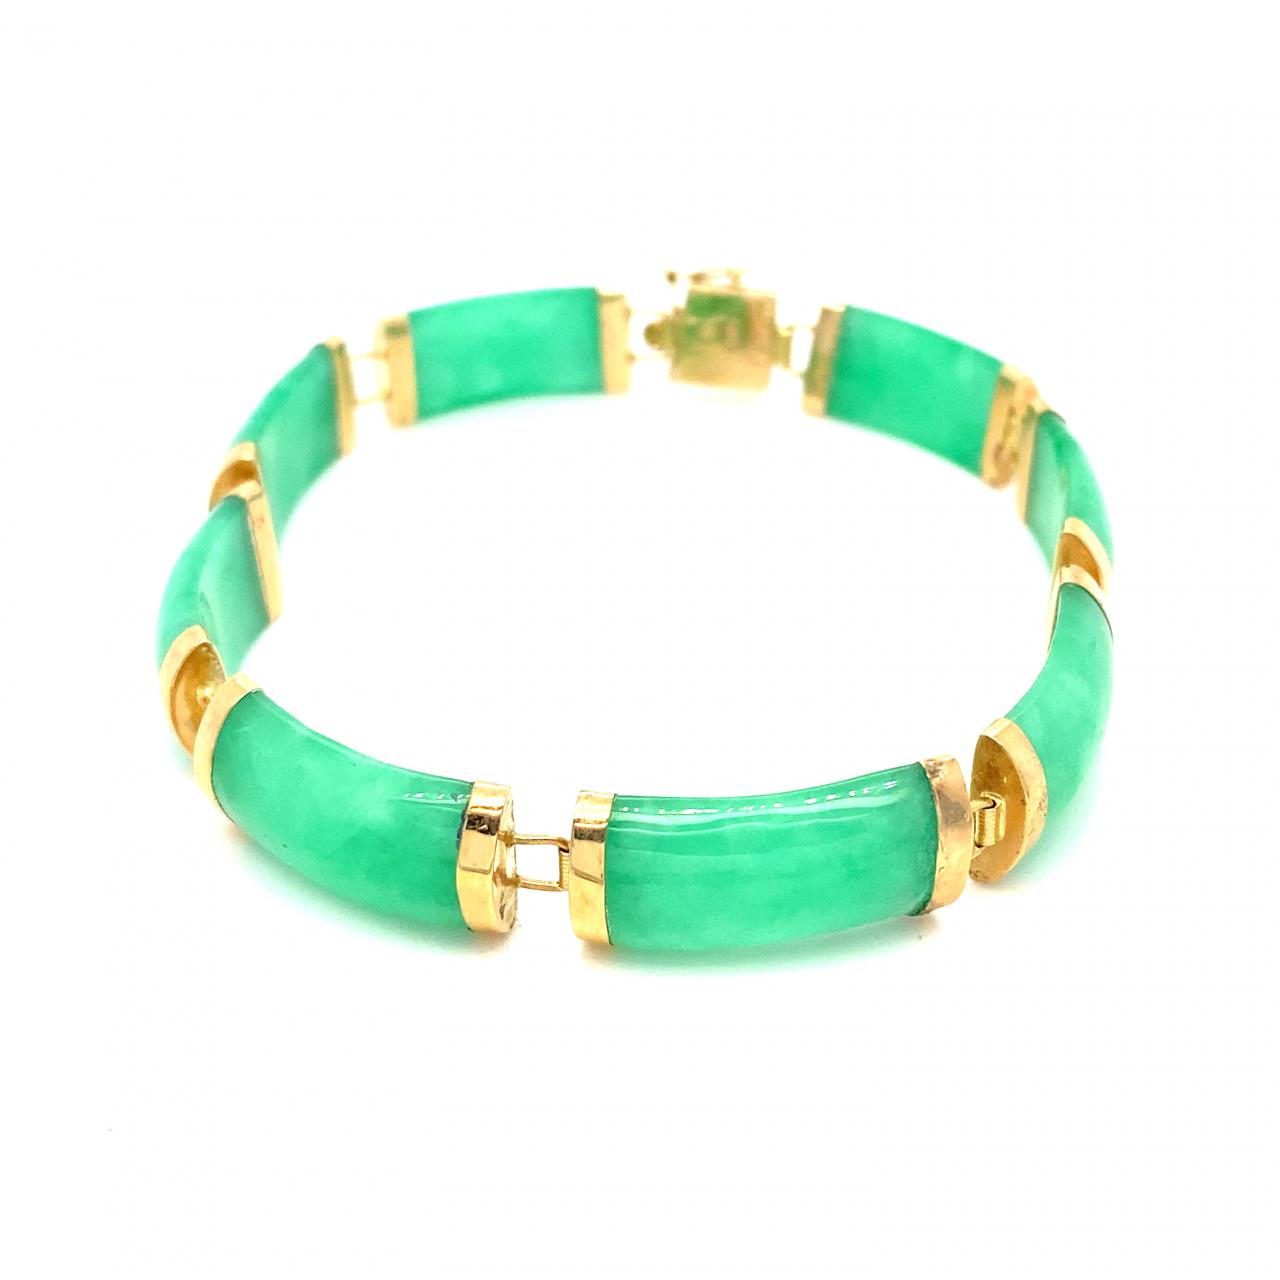 8 Green Rectangular Jade Links and 14K Yellow Gold Link Bracelet 7"